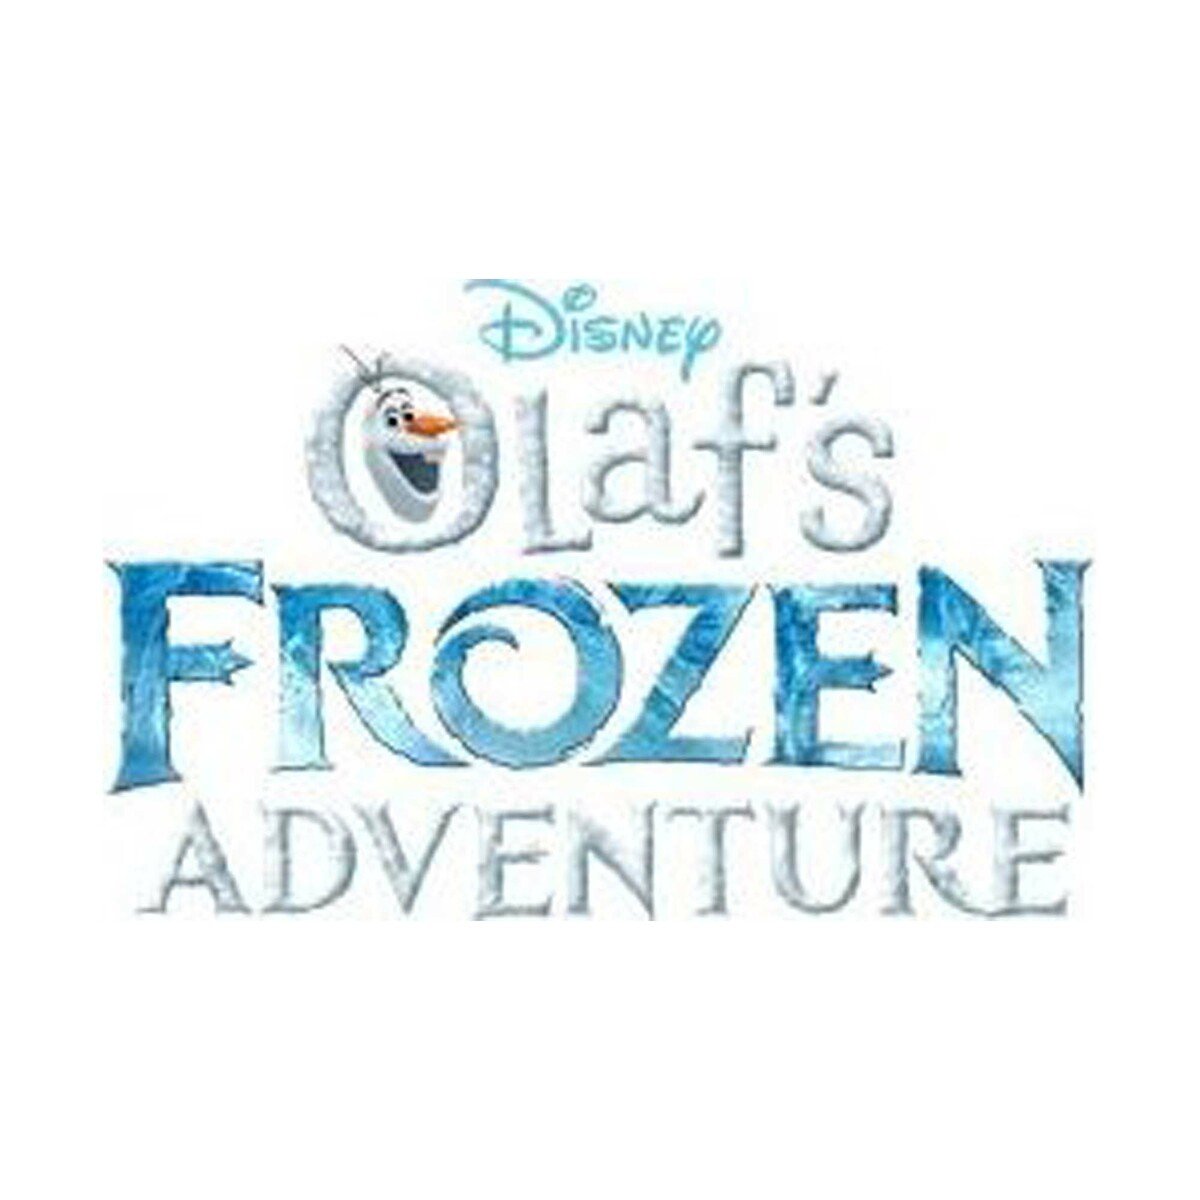 Disney Frozen Olaf Soft Night Light 40450